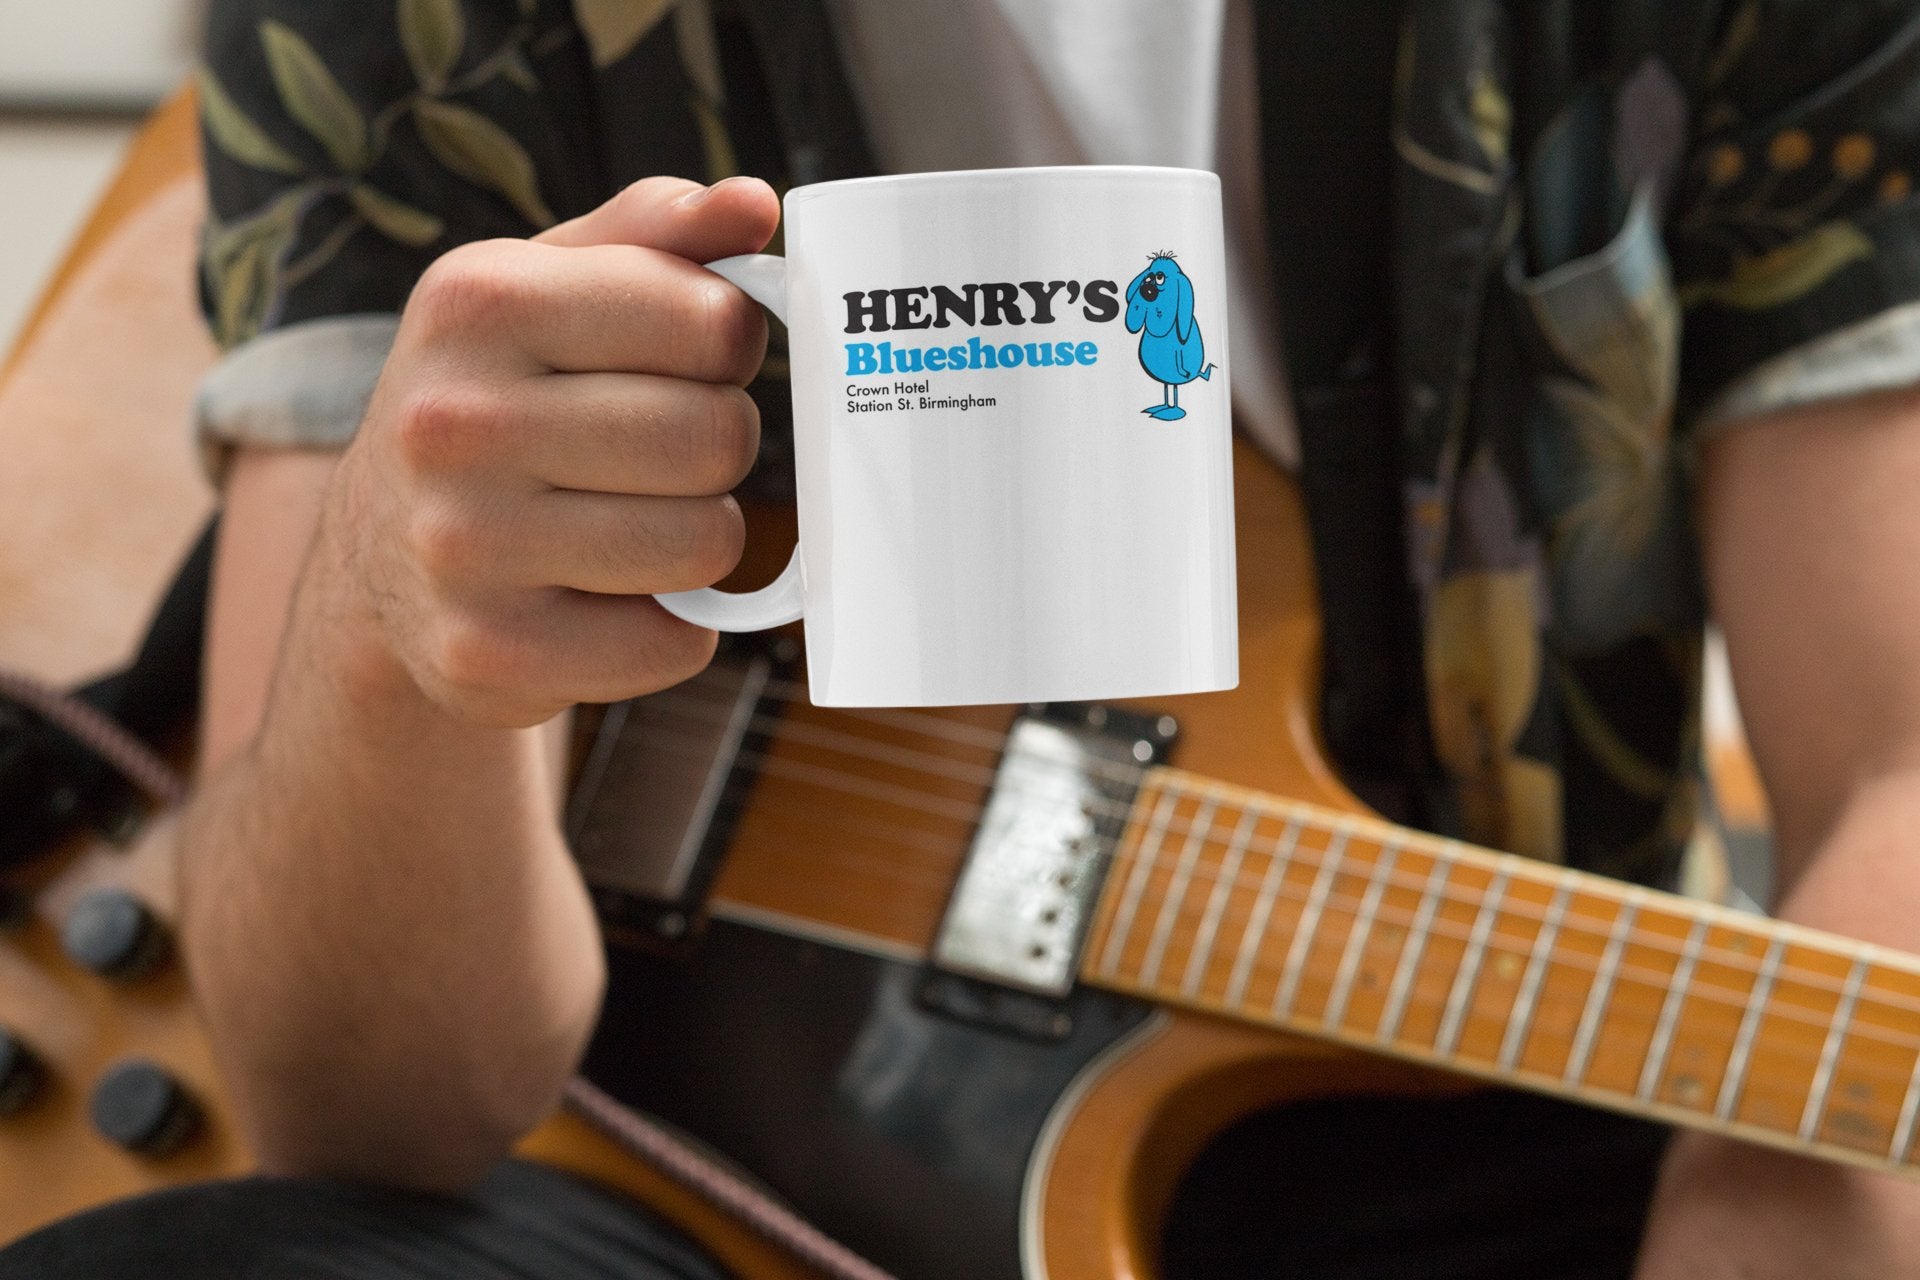 Henry's Blueshouse mug - Dirty Stop Outs